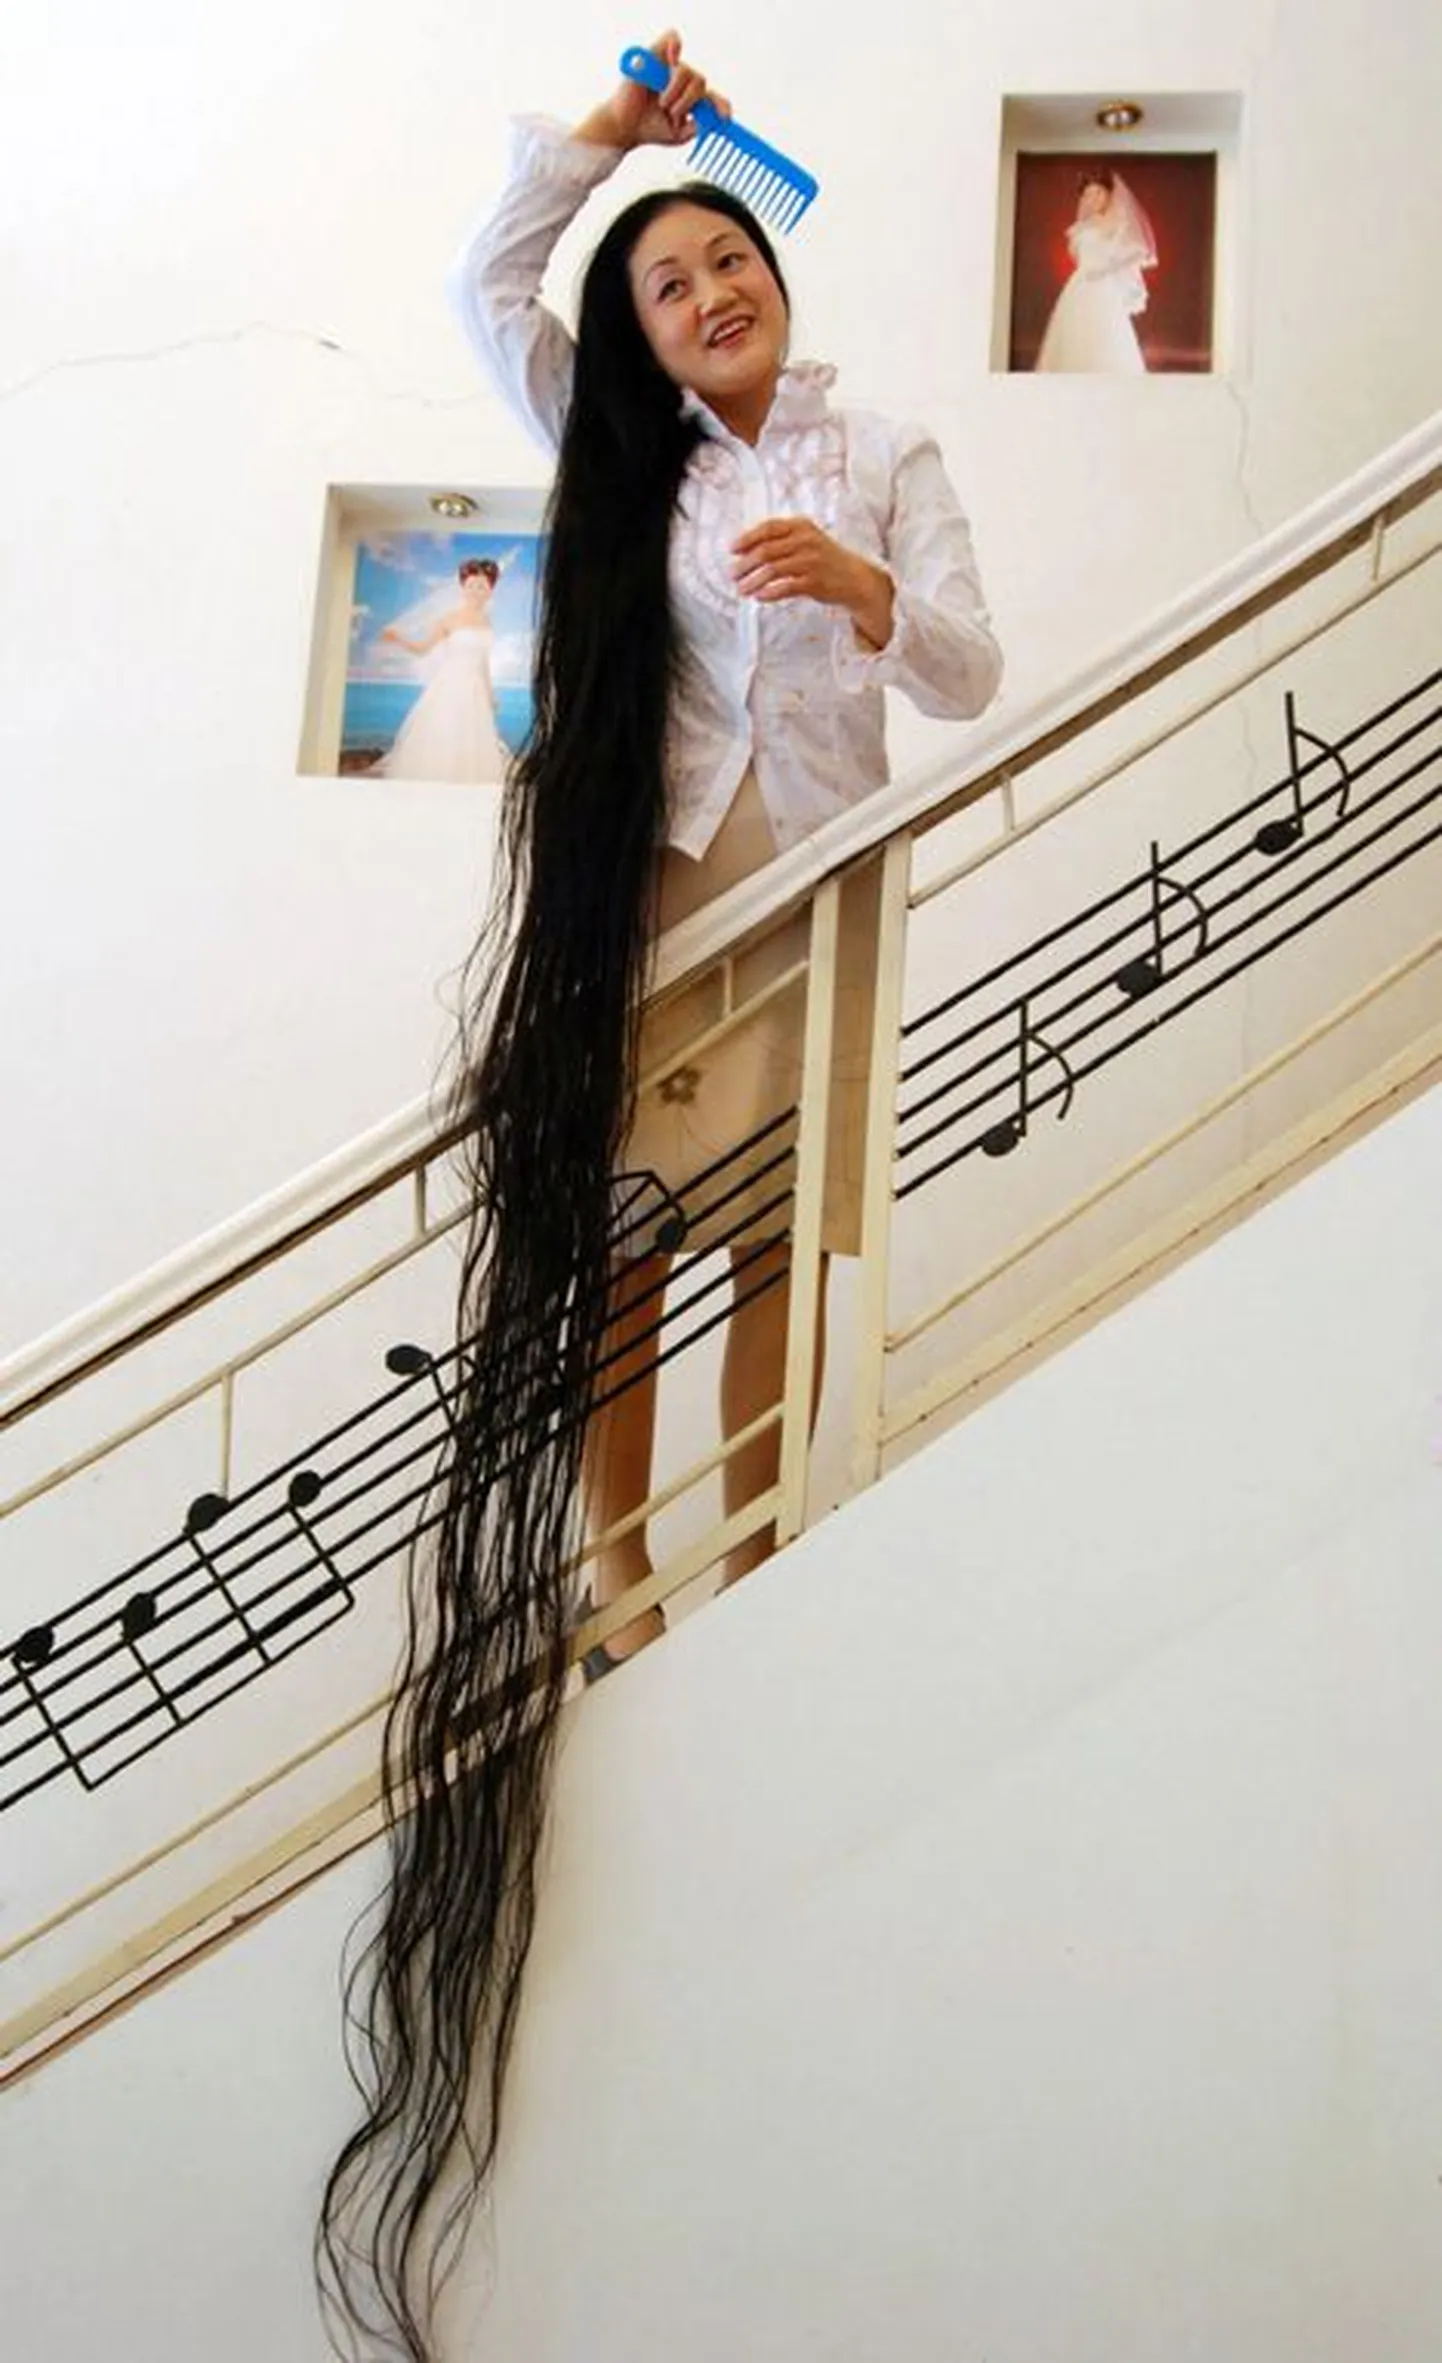 Cheng Shiqiongi juuste pikkus on 2,4 meetrit